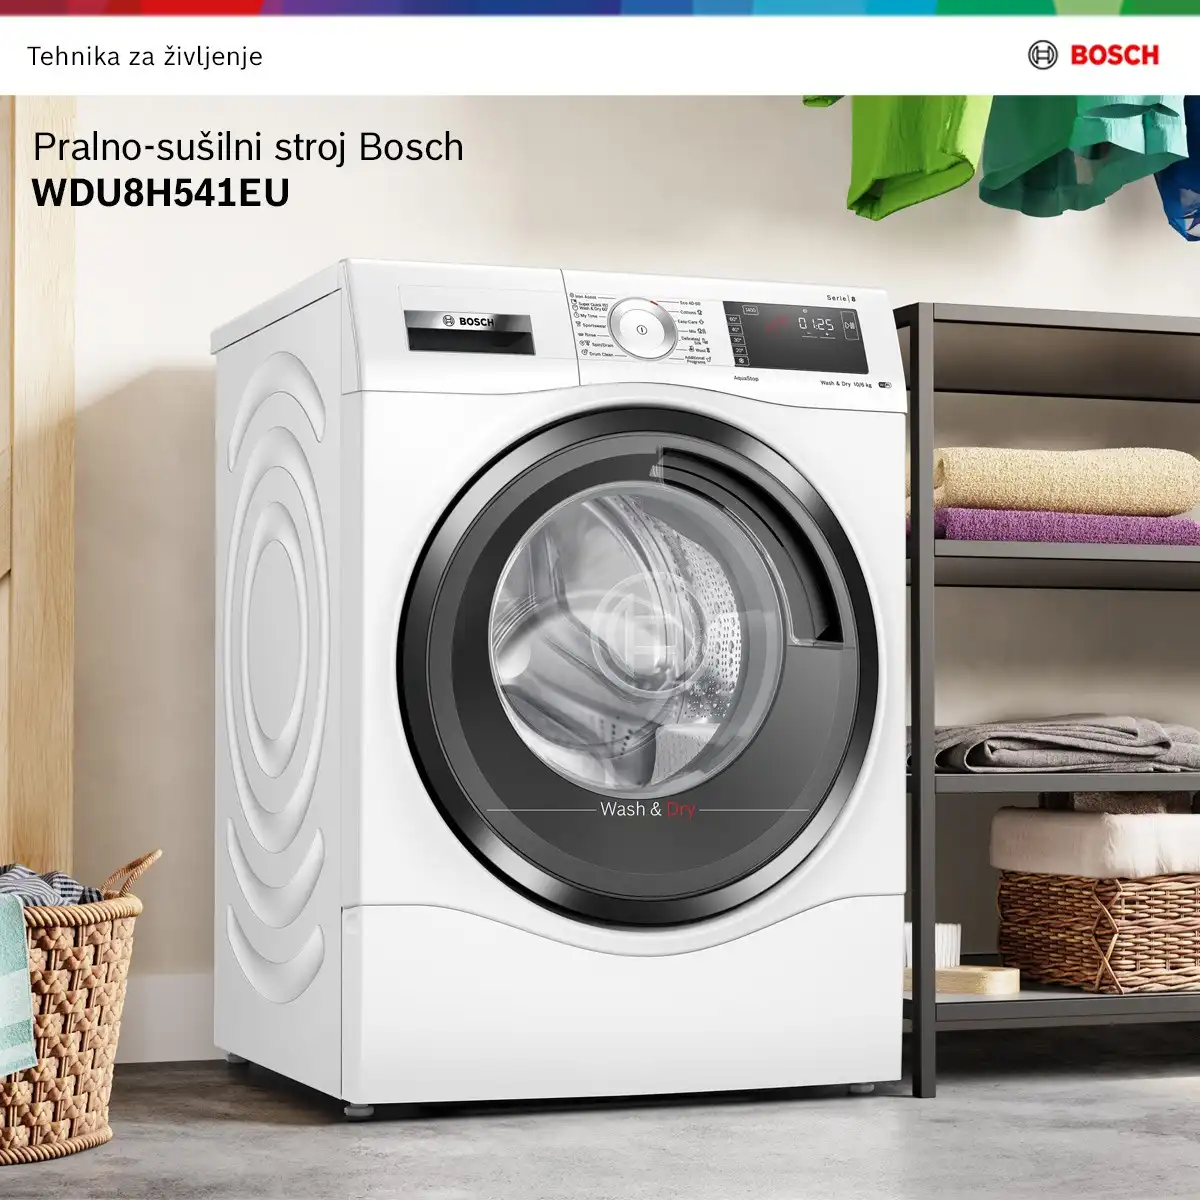 Bosch - pralno-sušilni stroj